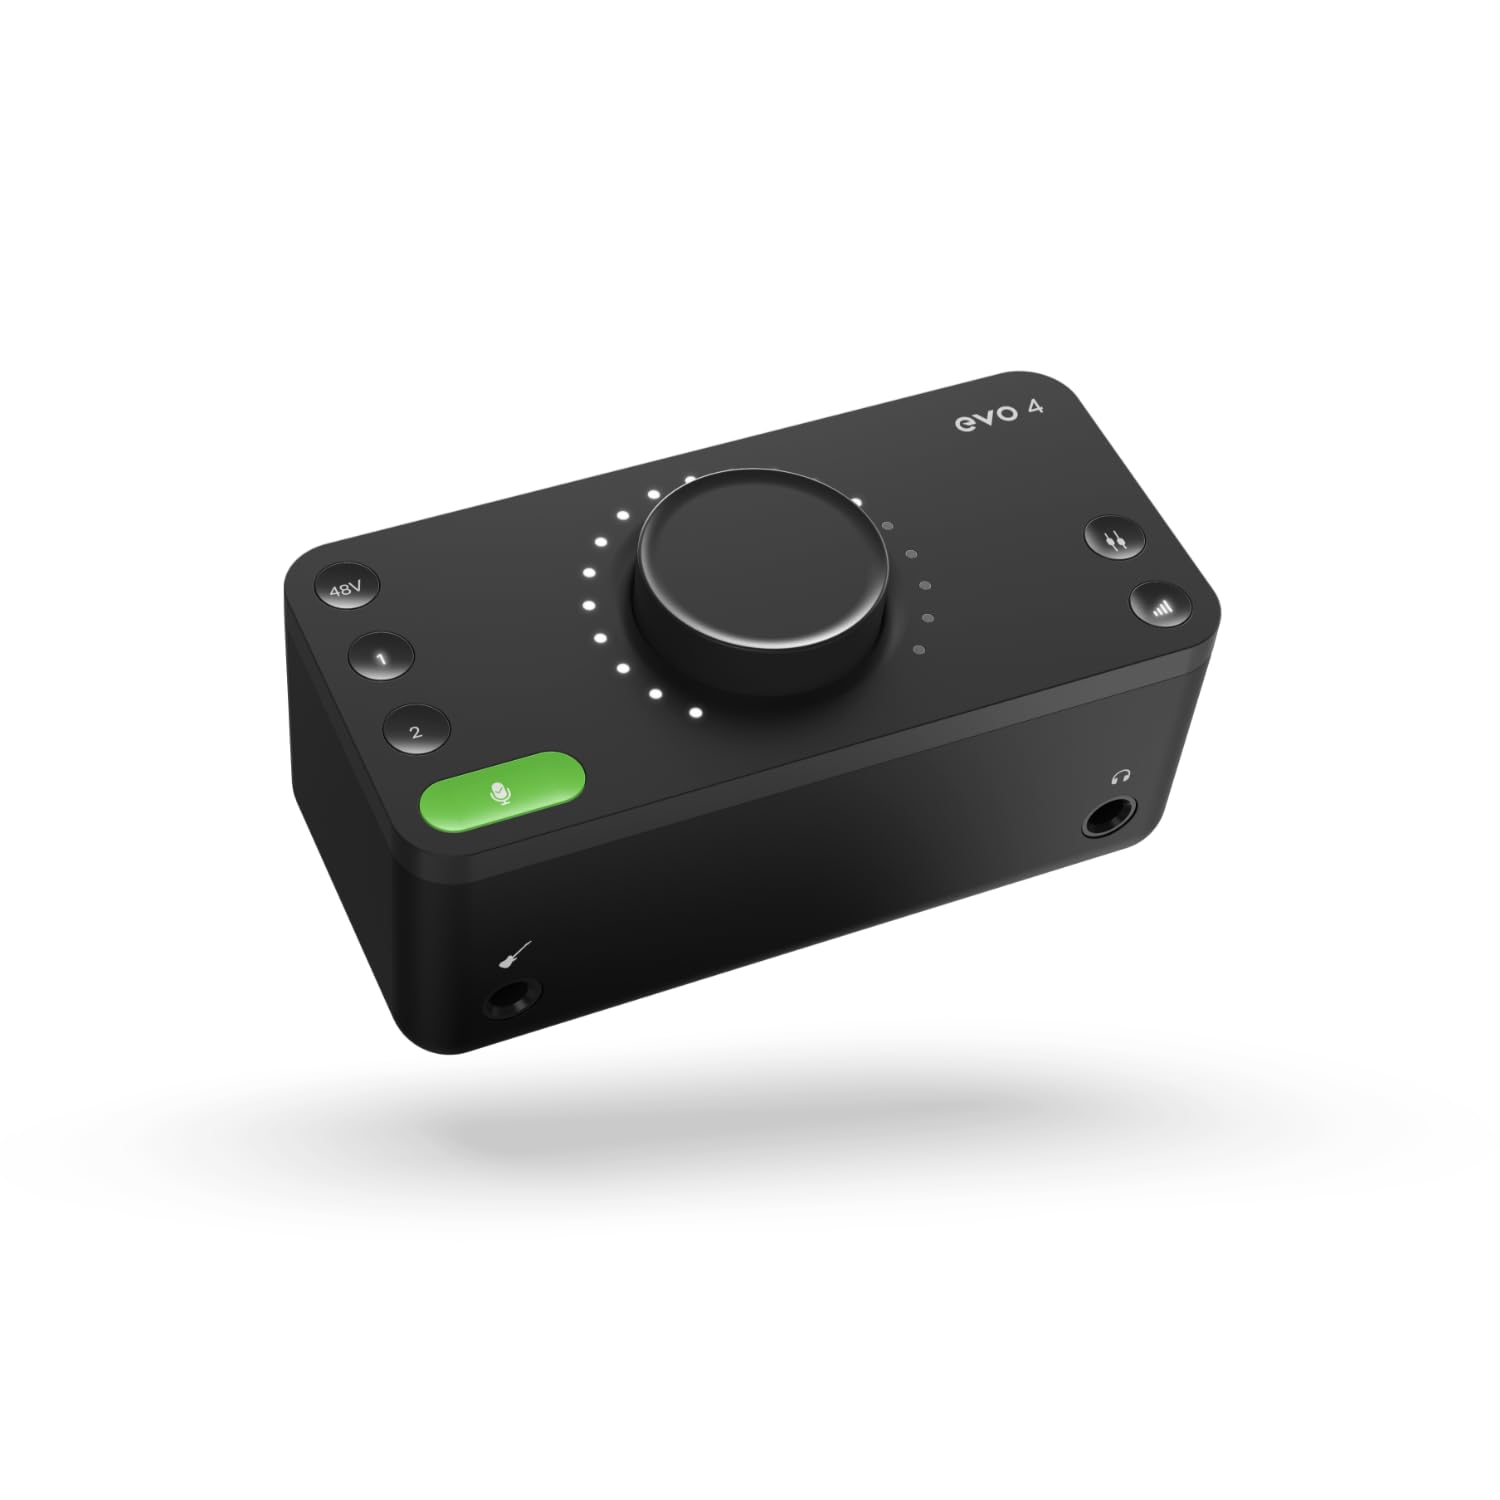 Abordable EVO 4 USB Audio Interface sound card for music production (2 in / 2 out USB audio-interface, 48 Volt phantom power, 2 microphone preamps, etc.) sAZaTqixH en vente